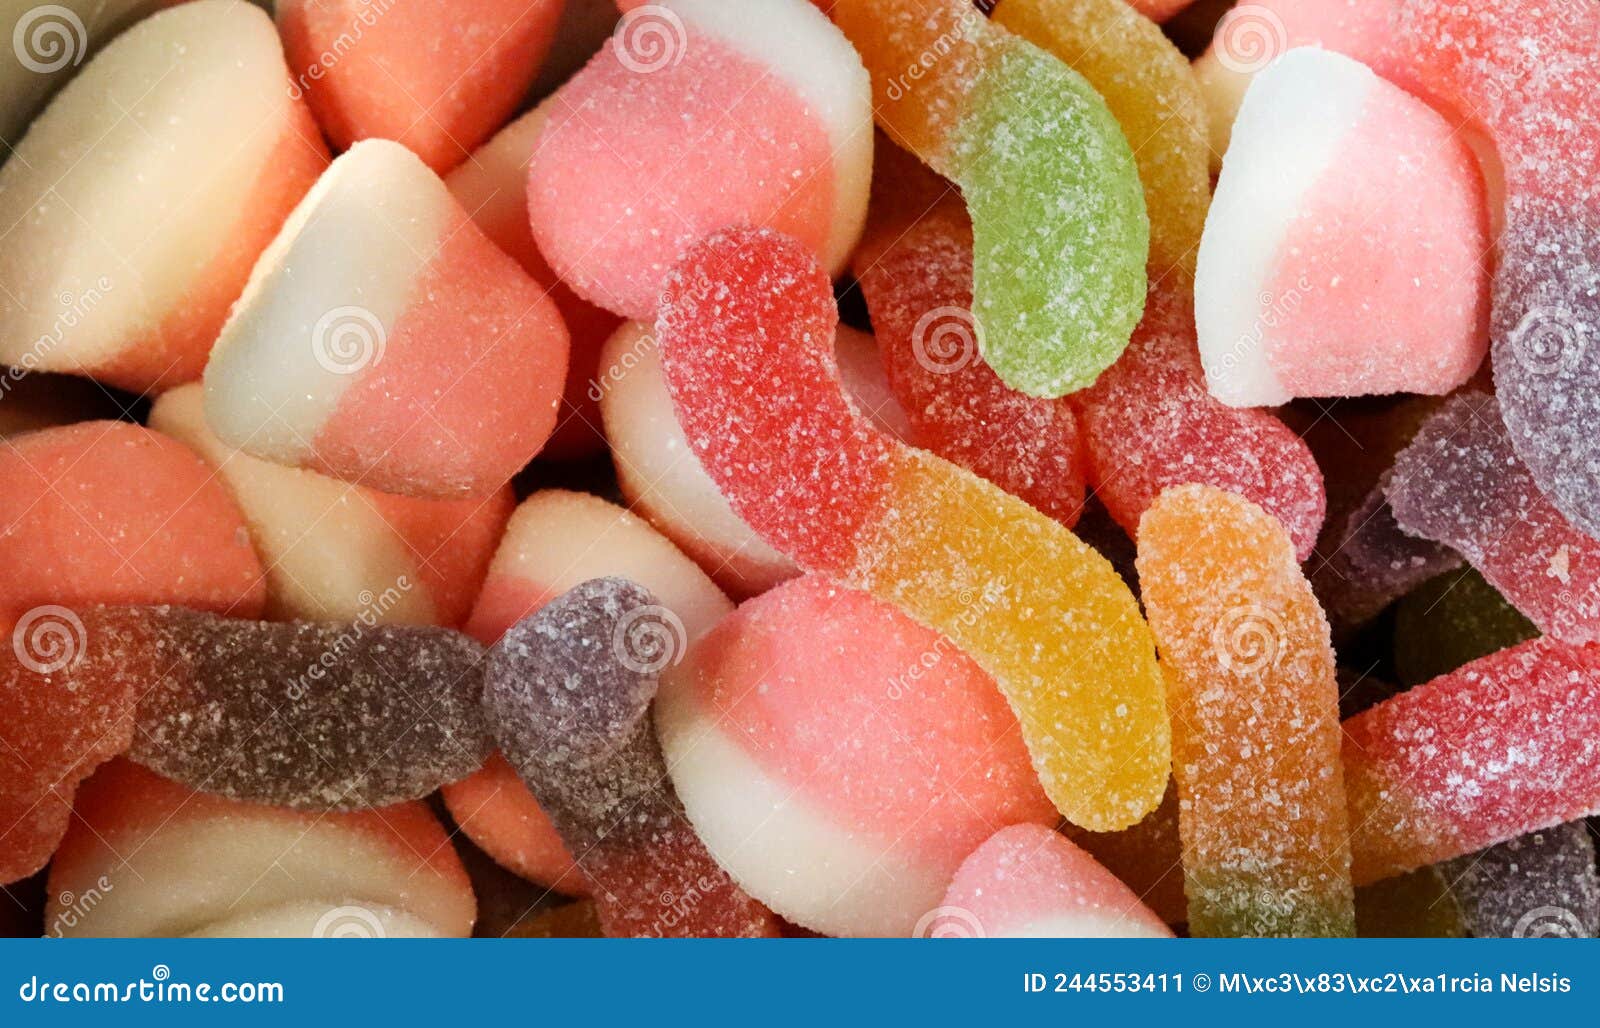 diferentes tipos de doces que dÃÂ£o uma bela cor ÃÂ  imagem.